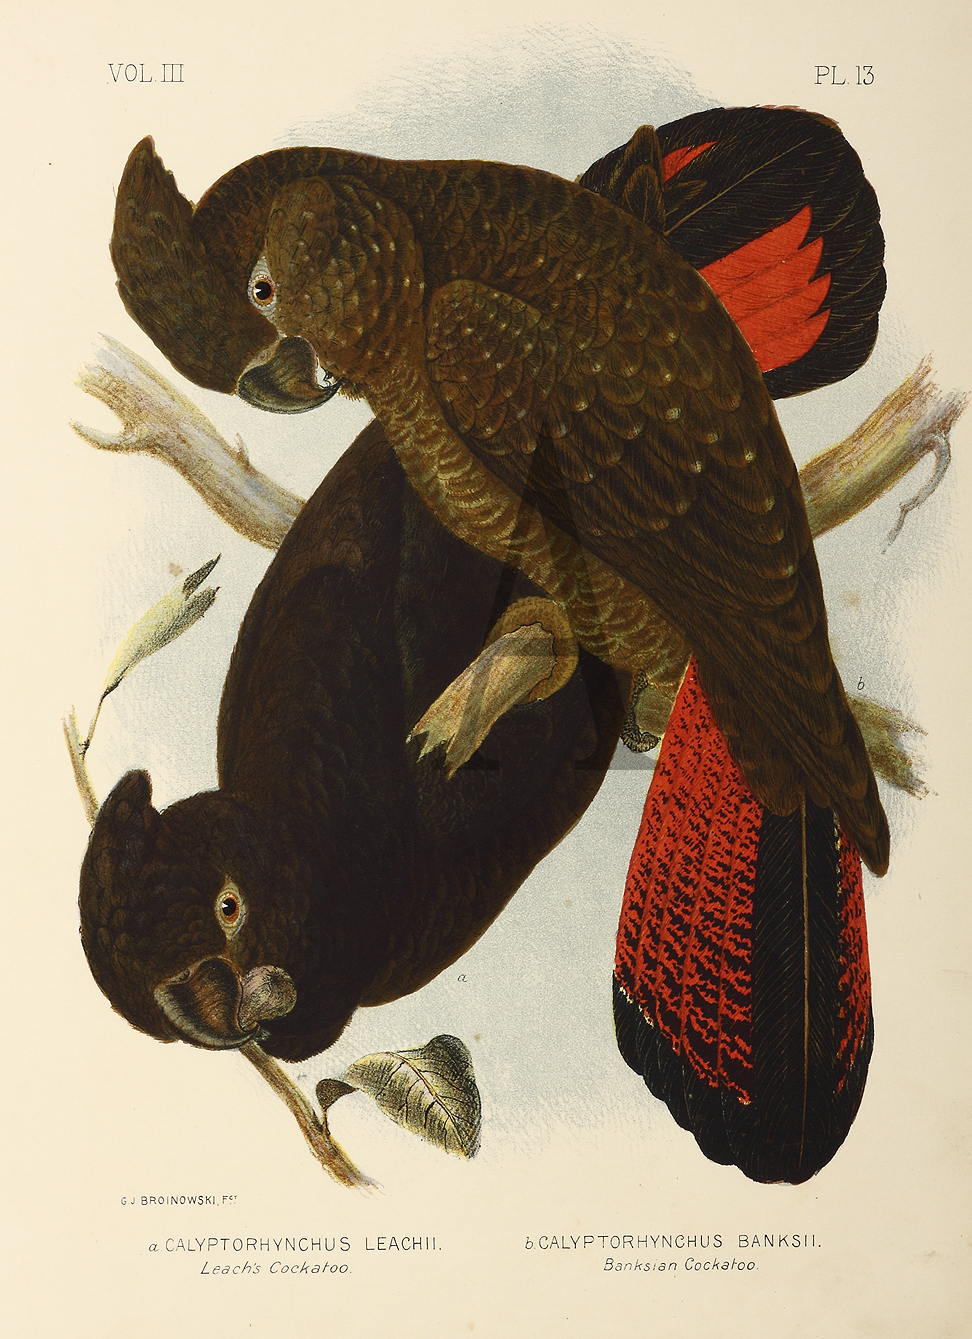 Calyptorhynchus Leachii. Leach's Cockatoo. Calyptorhynchus Banksii. Banksian Cockatoo. - Antique Print from 1889